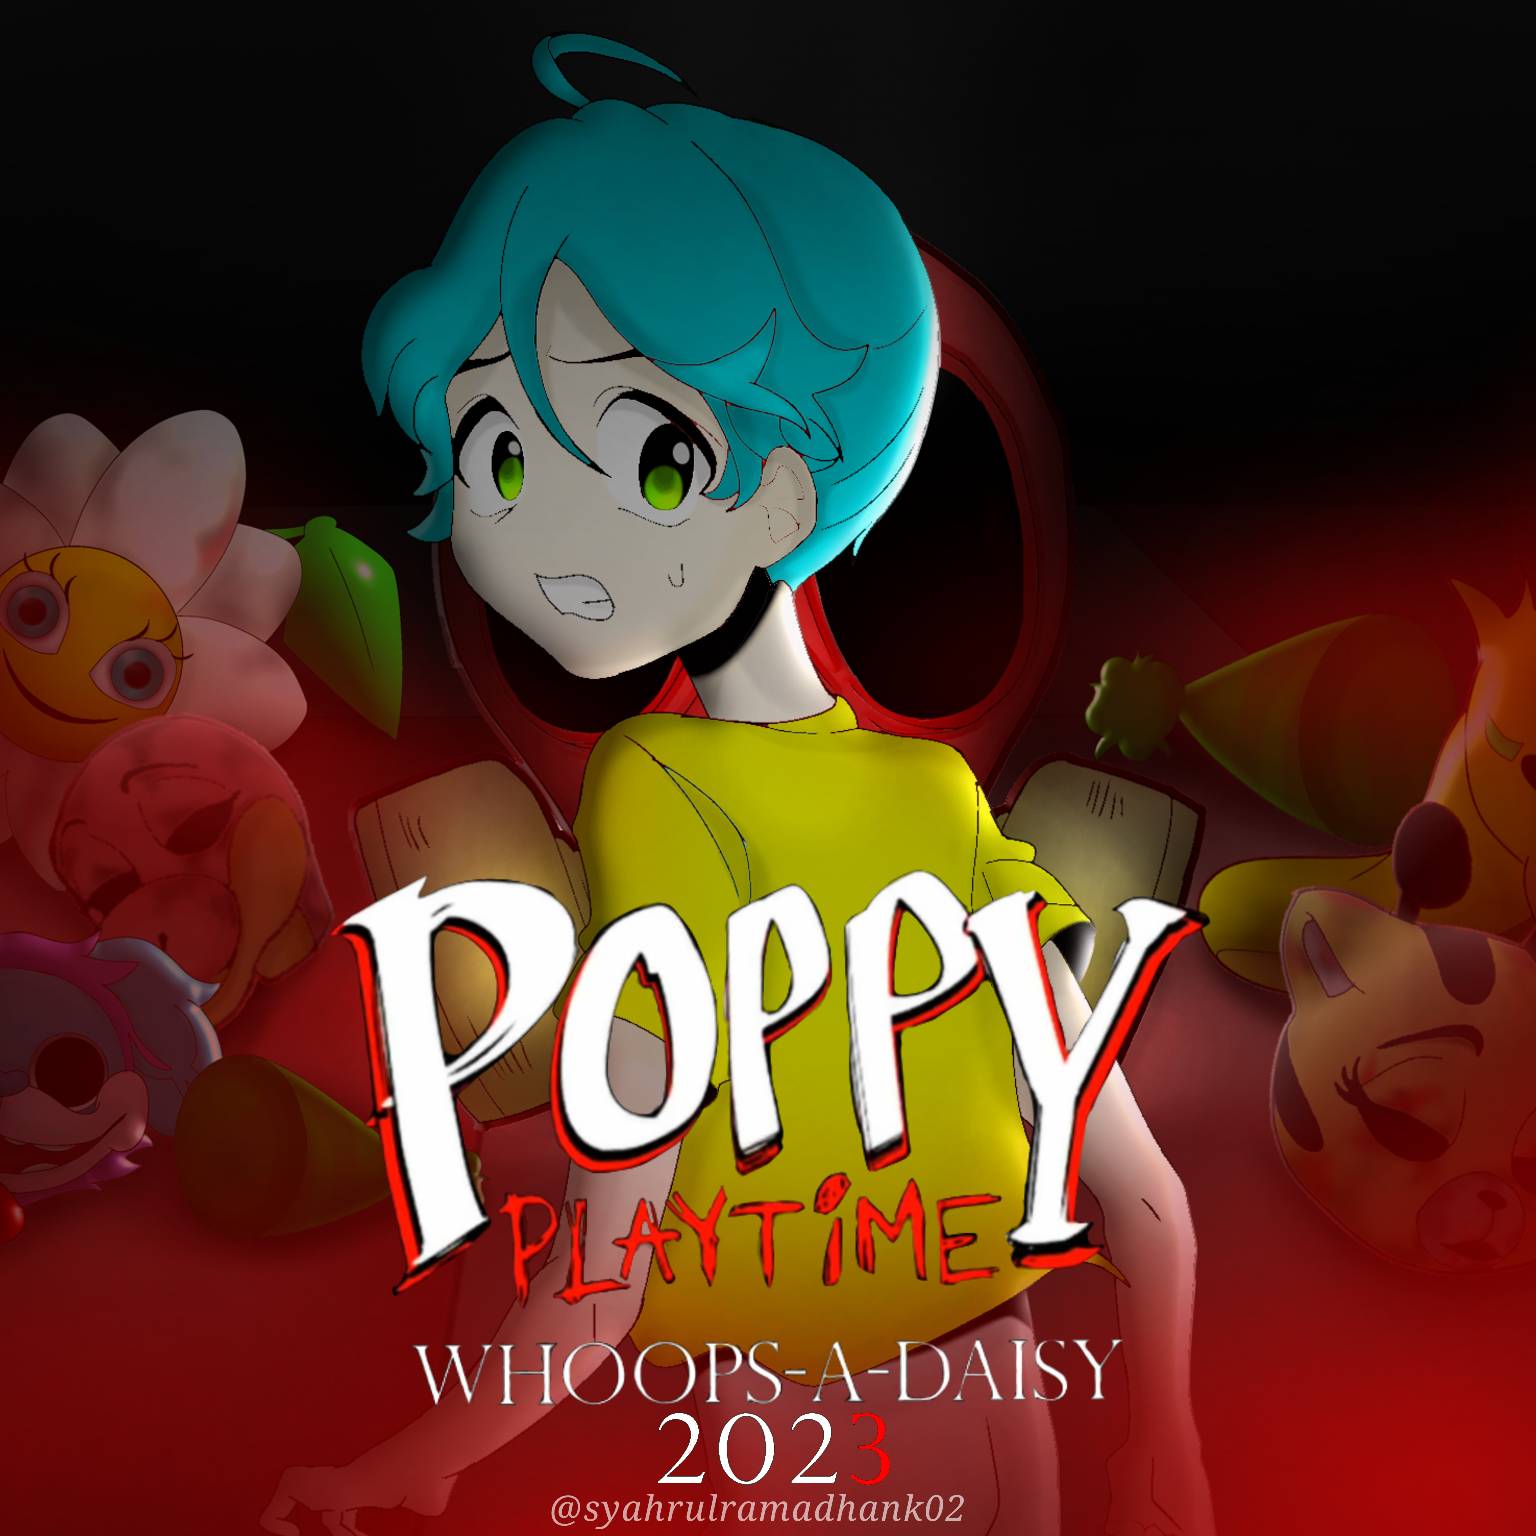 More Poppy Playtime chapter 3 Images : r/PoppyPlaytime